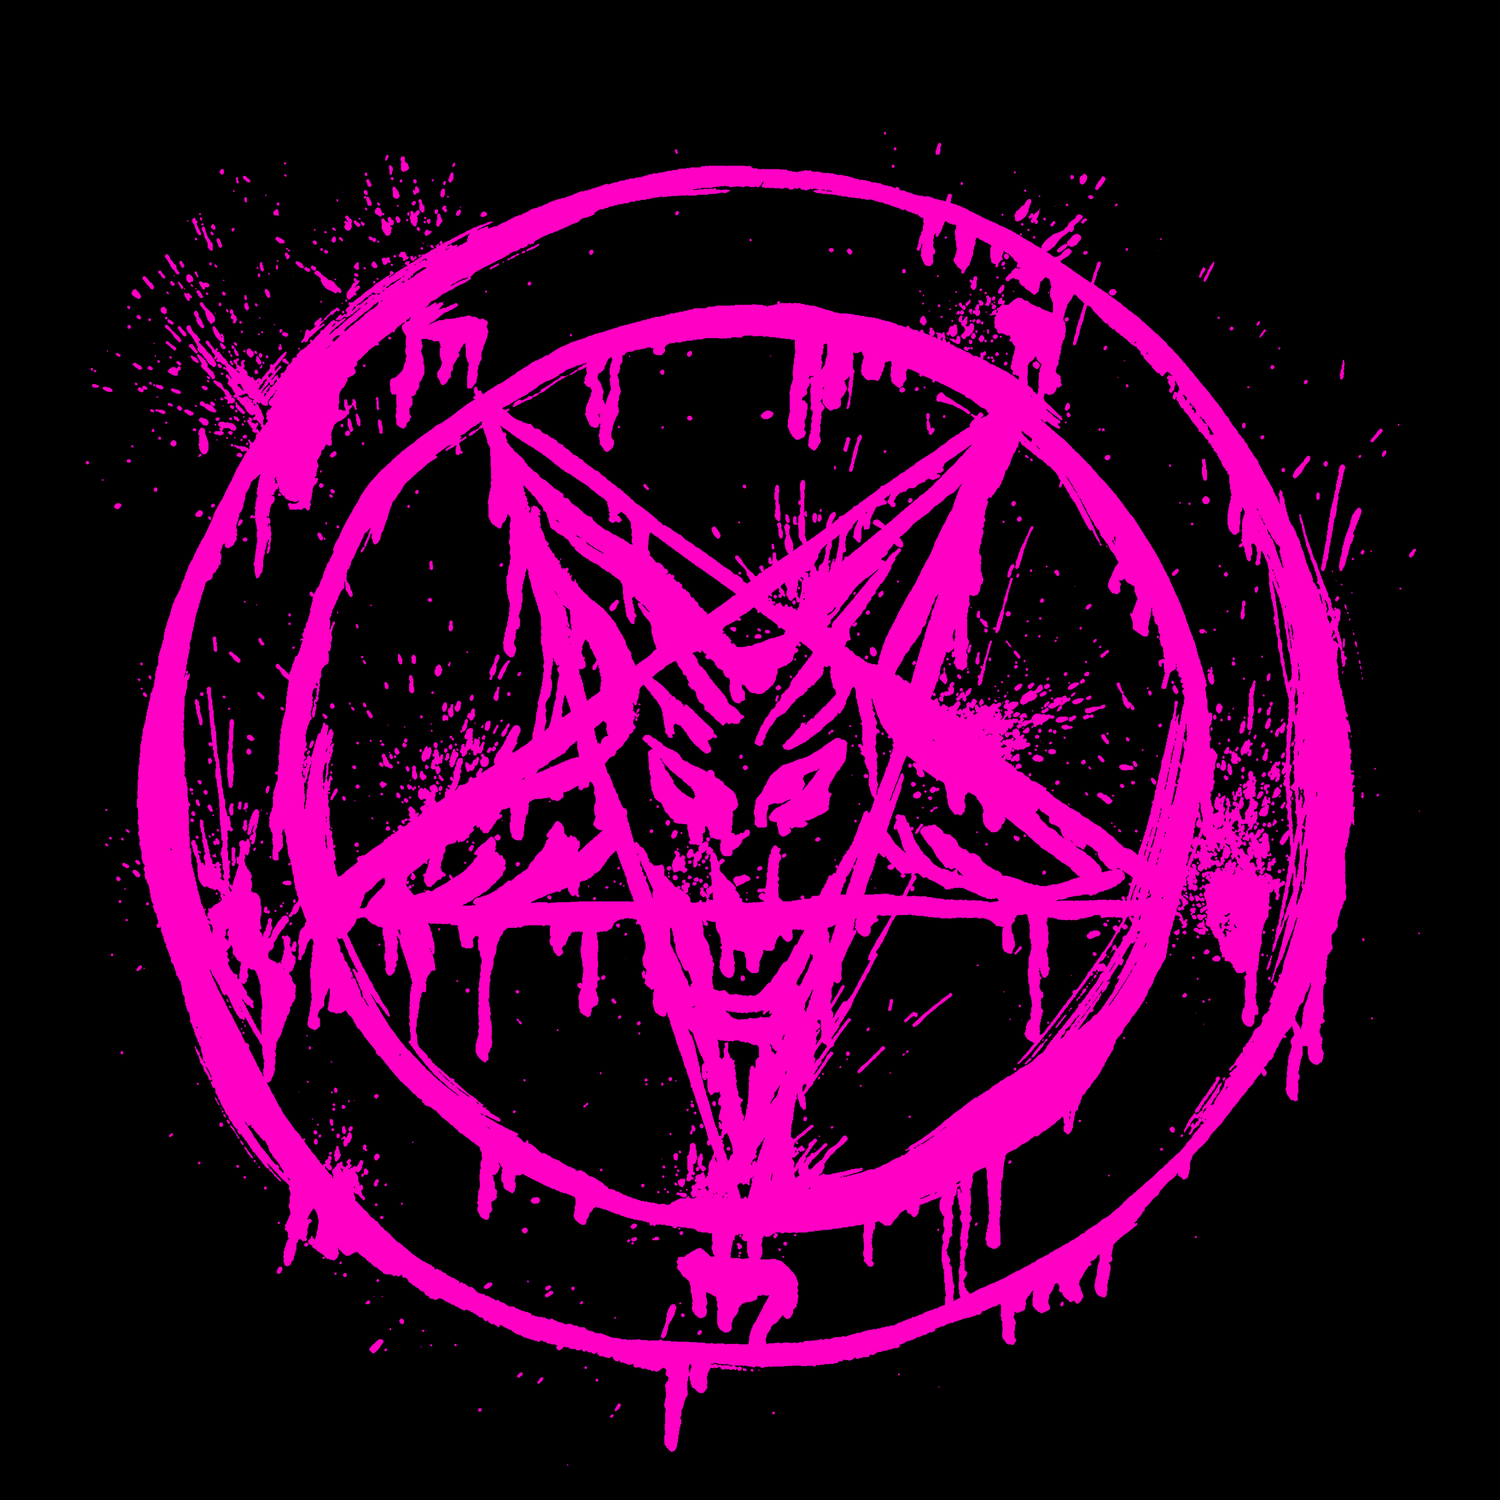 Сатанинский знак 666